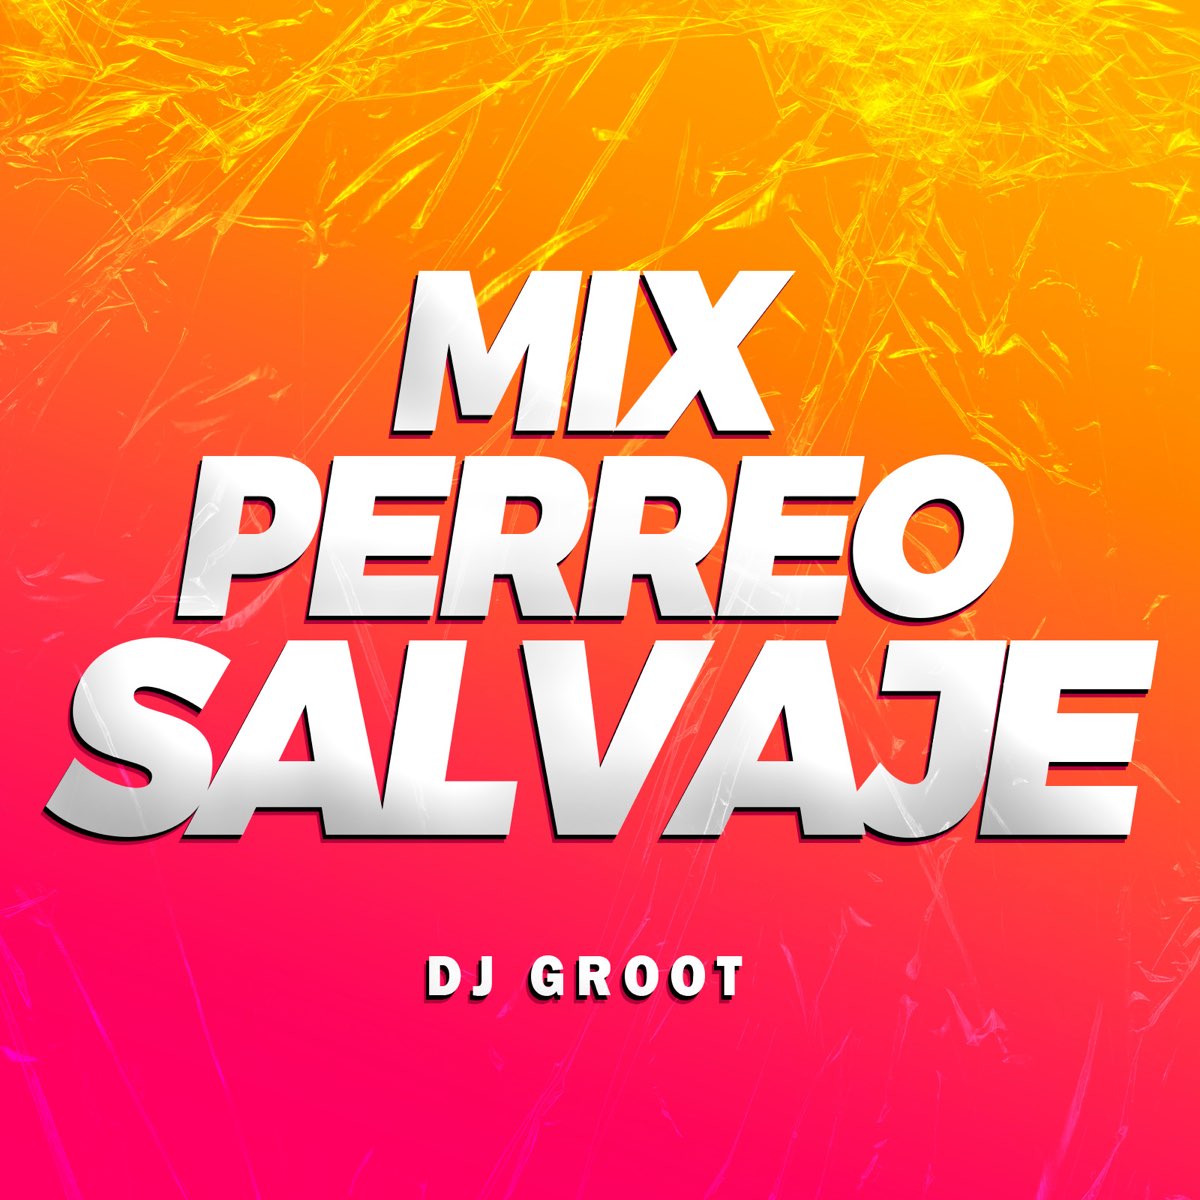 Mix Perreo Salvaje - EP - Album by DJ GROOT - Apple Music